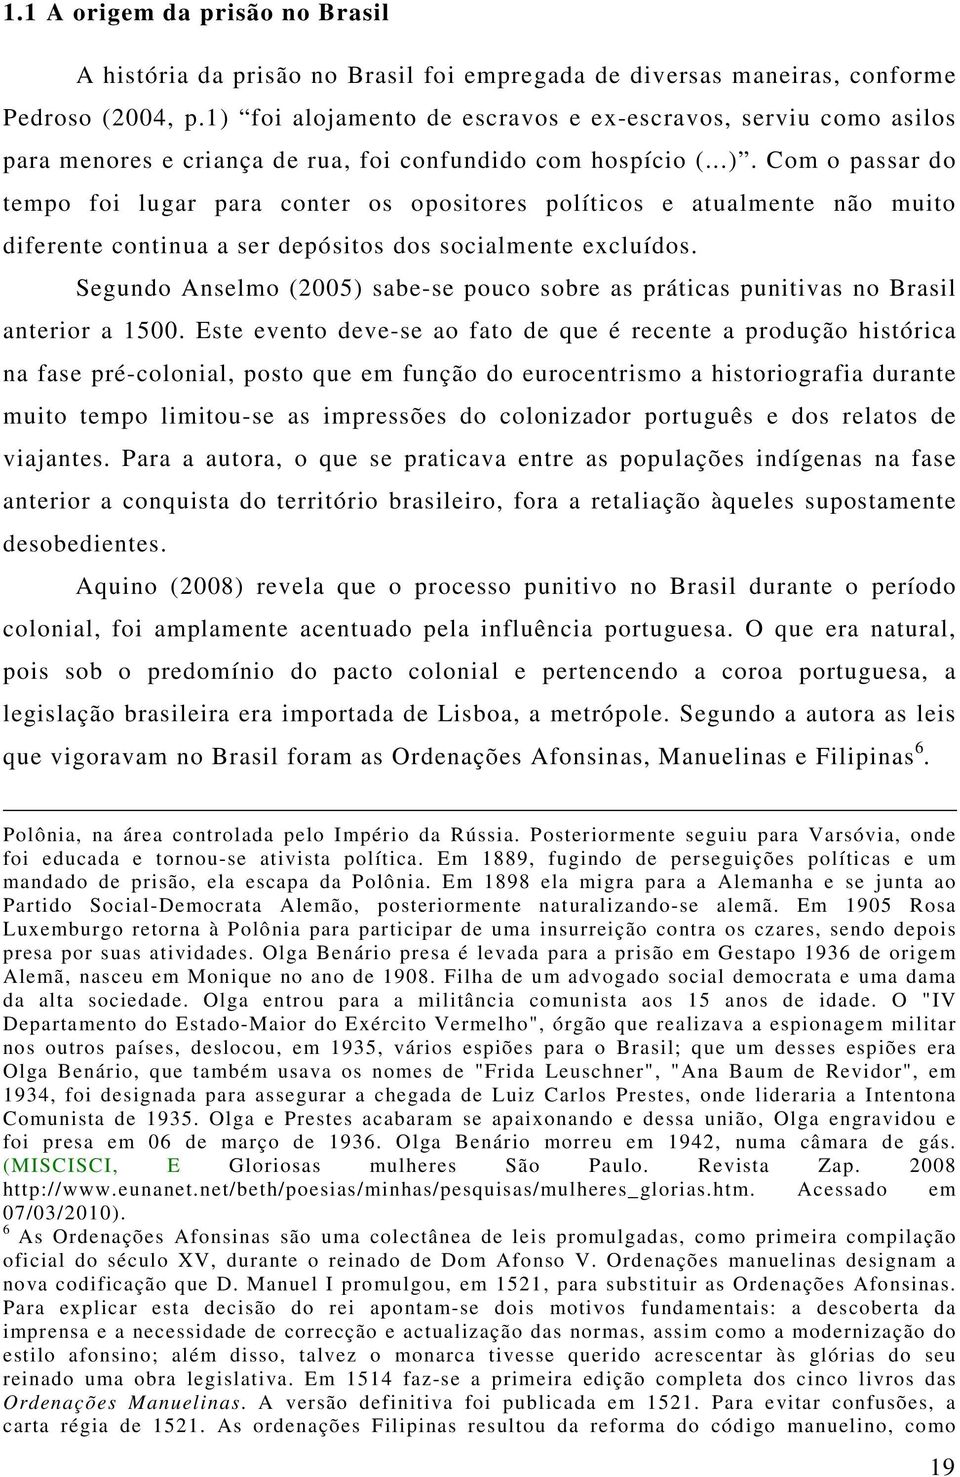 Segundo Anselmo (2005) sabe-se pouco sobre as práticas punitivas no Brasil anterior a 1500.